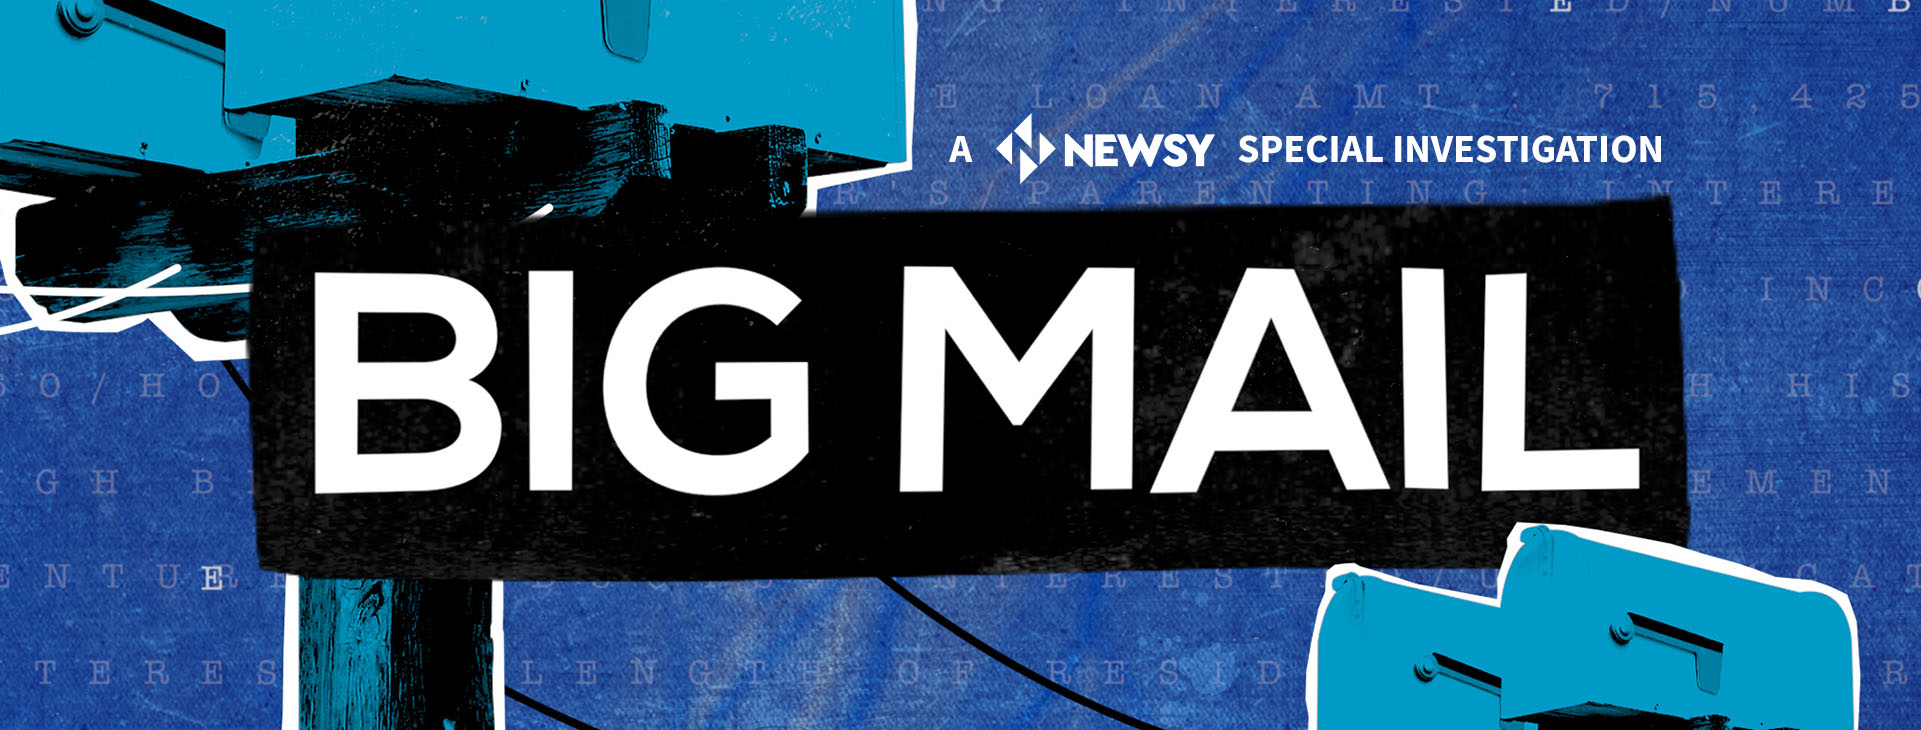 Big Mail Newsy special investigation logo